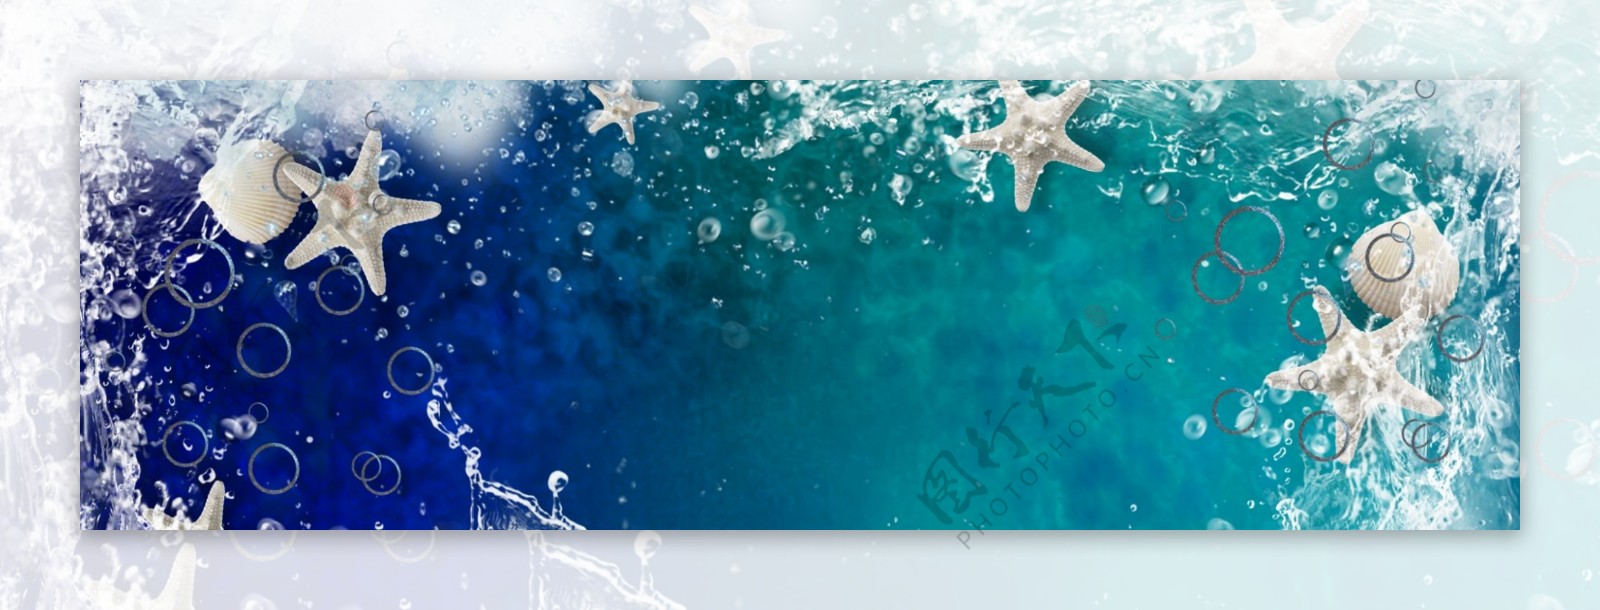 蓝色海底海星海洋banner背景